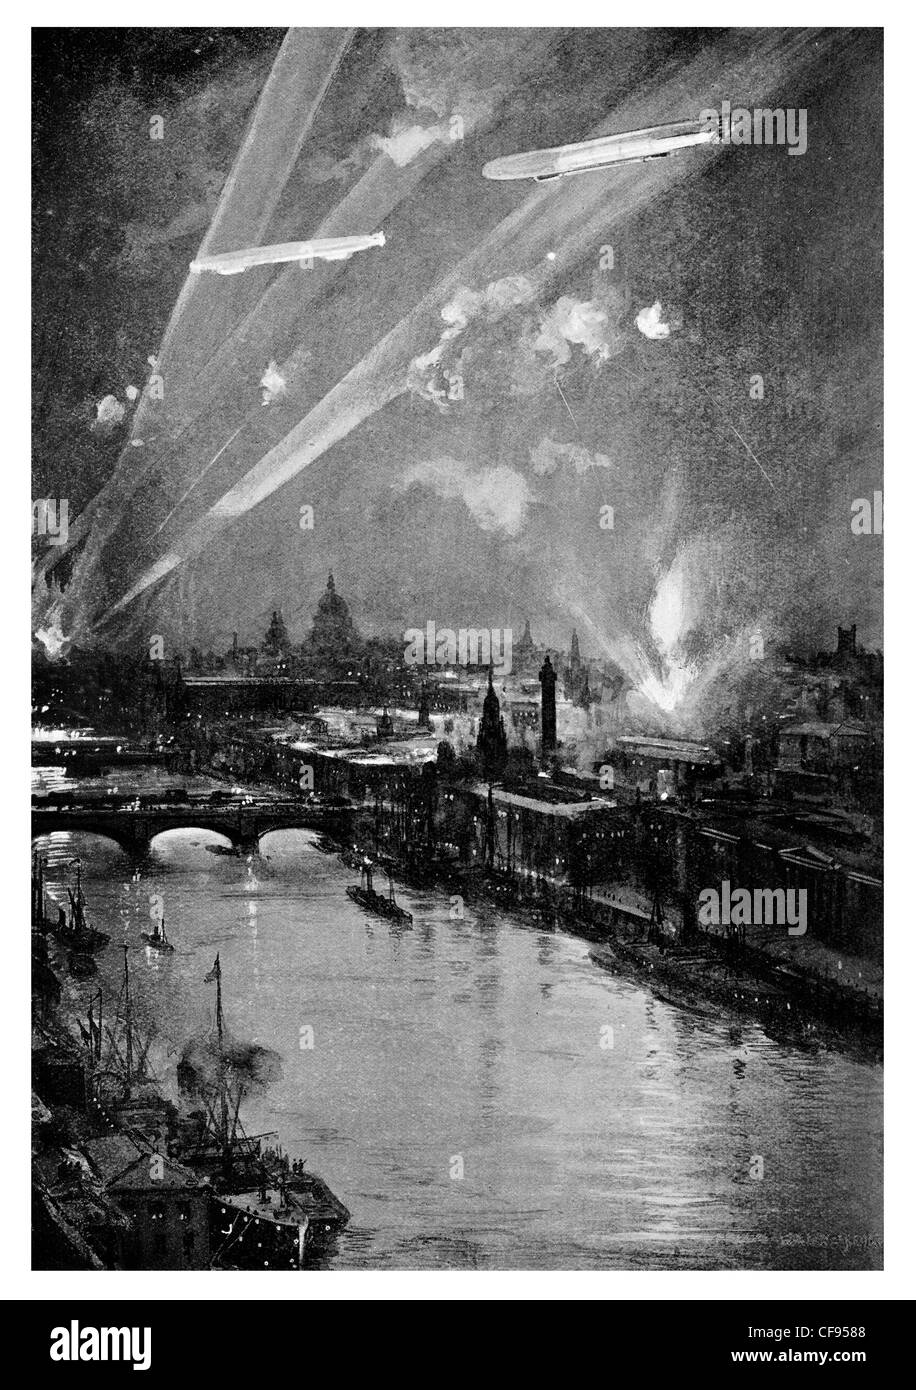 Zeppelin alemán sobre el río Támesis de Londres, Inglaterra buscar light night explosión de bomba Foto de stock